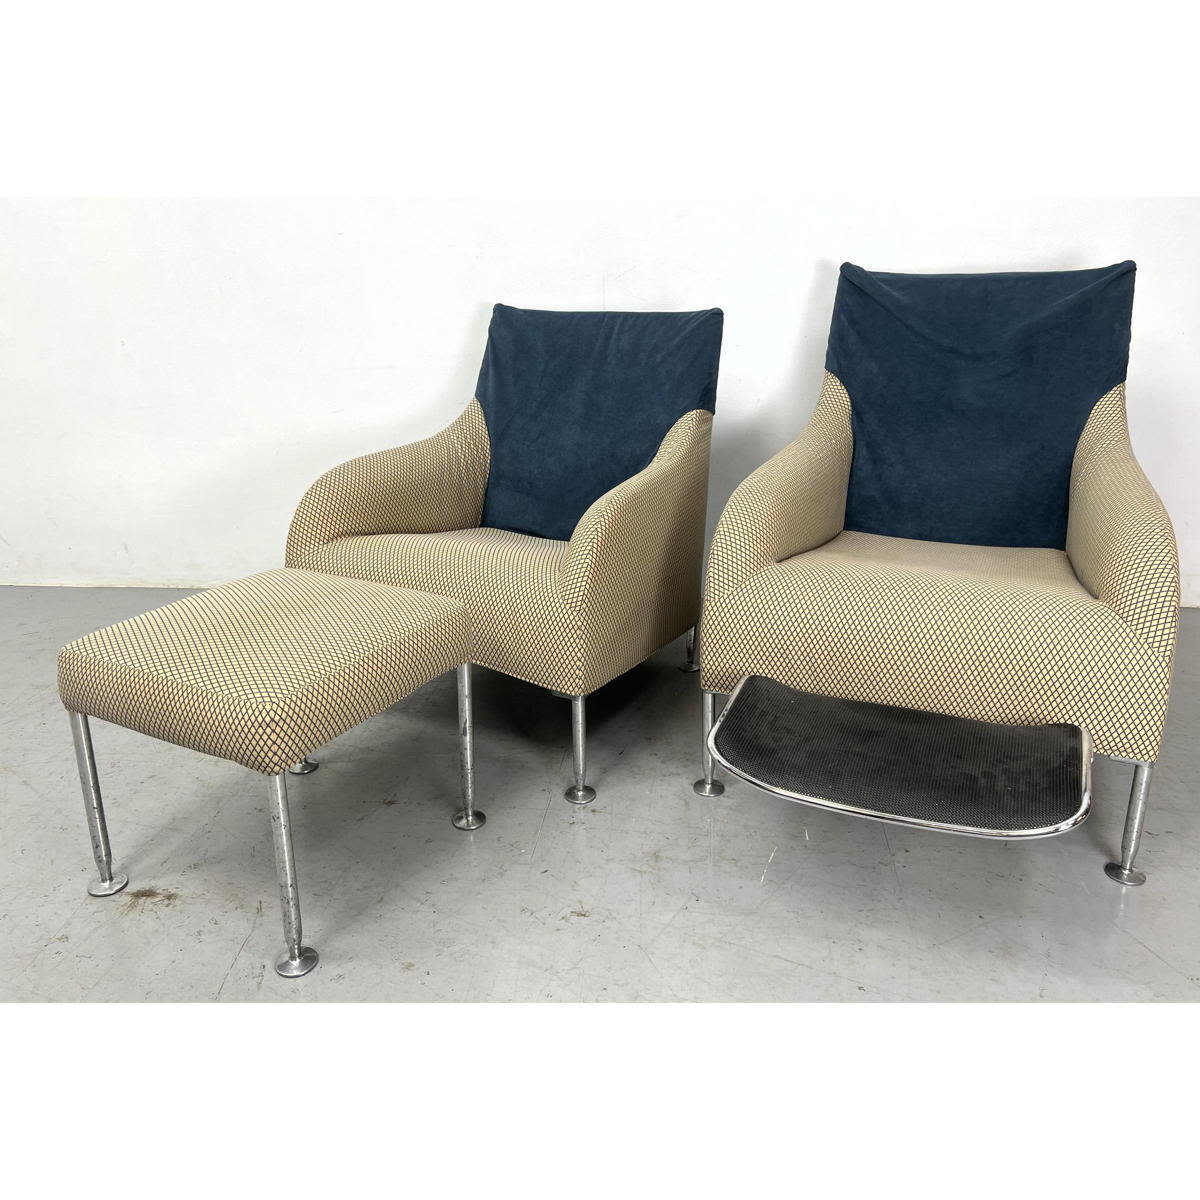 3pcs B and B Italia Lounge chairs 30031a